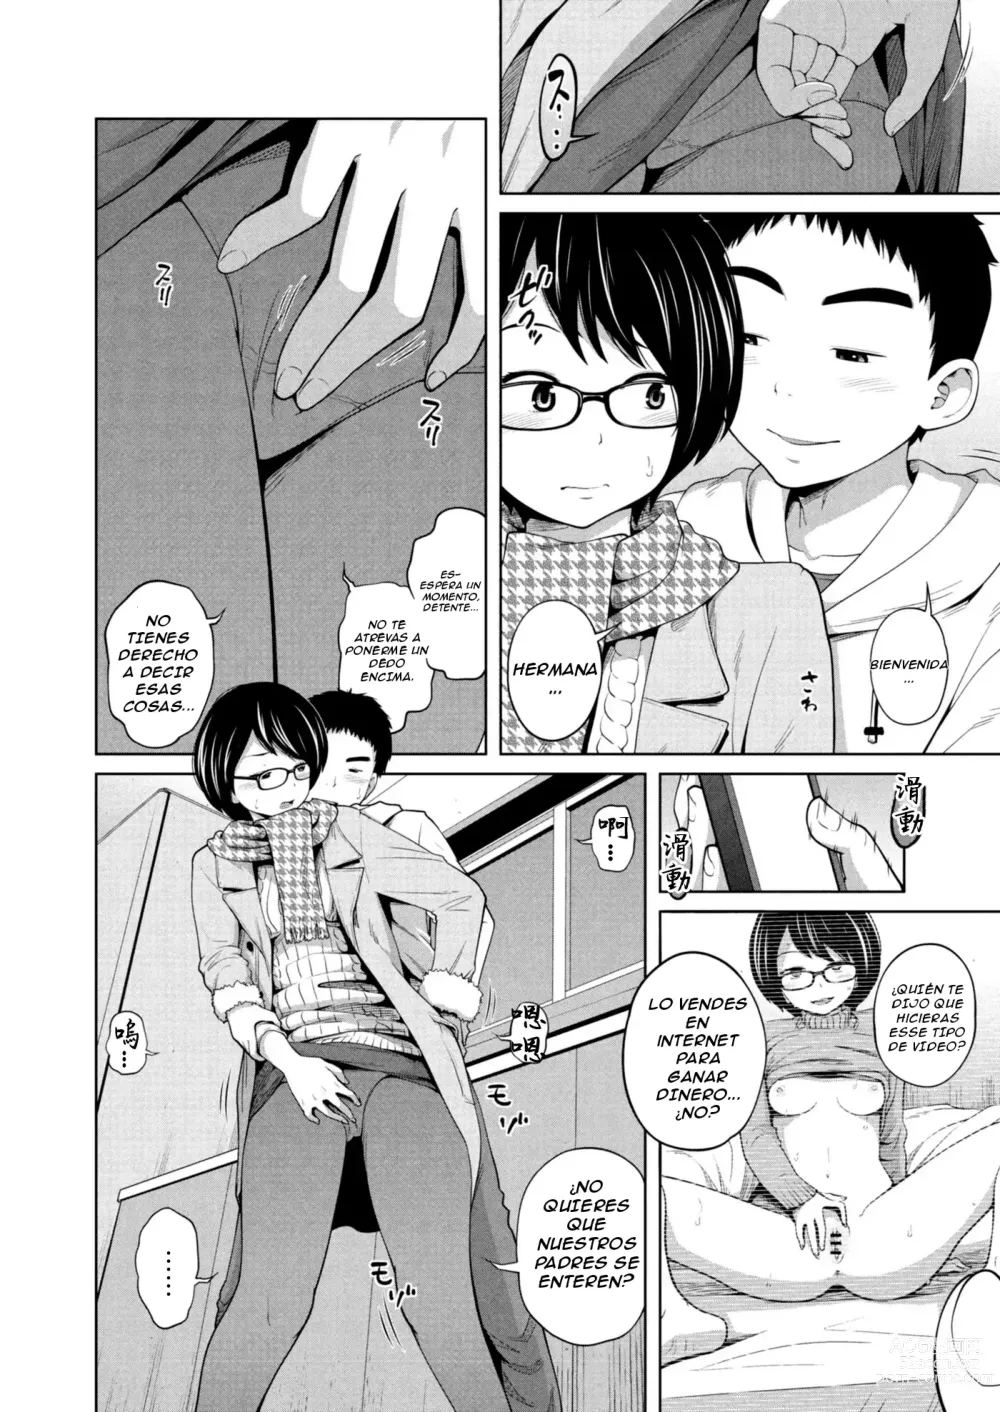 Page 2 of manga Ane Megane 7-wa Yowami wa Tsuyomi!?